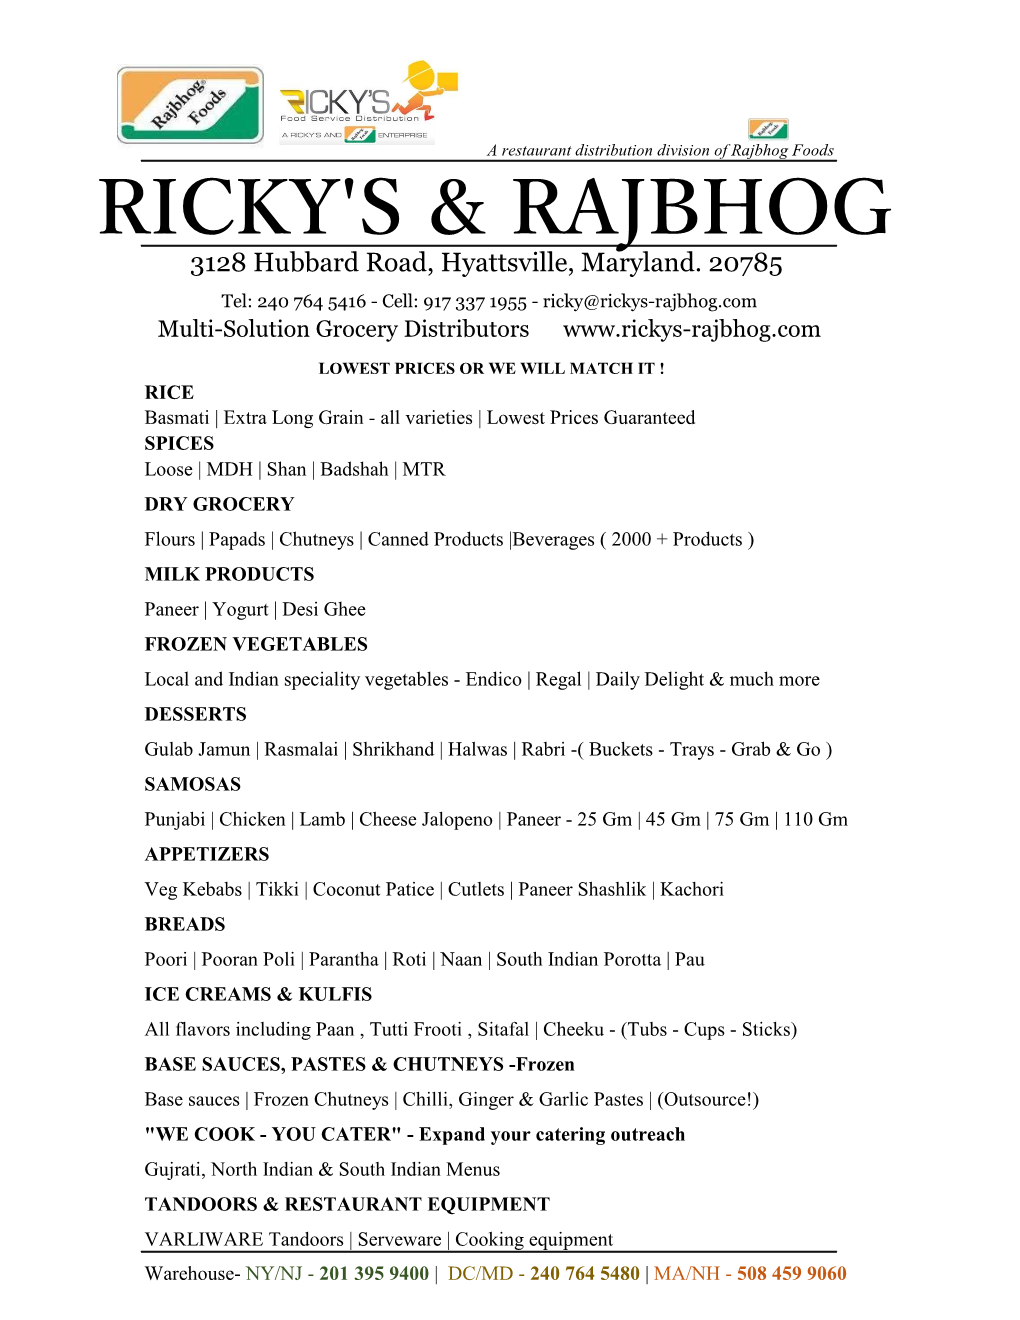 Ricky's & Rajbhog